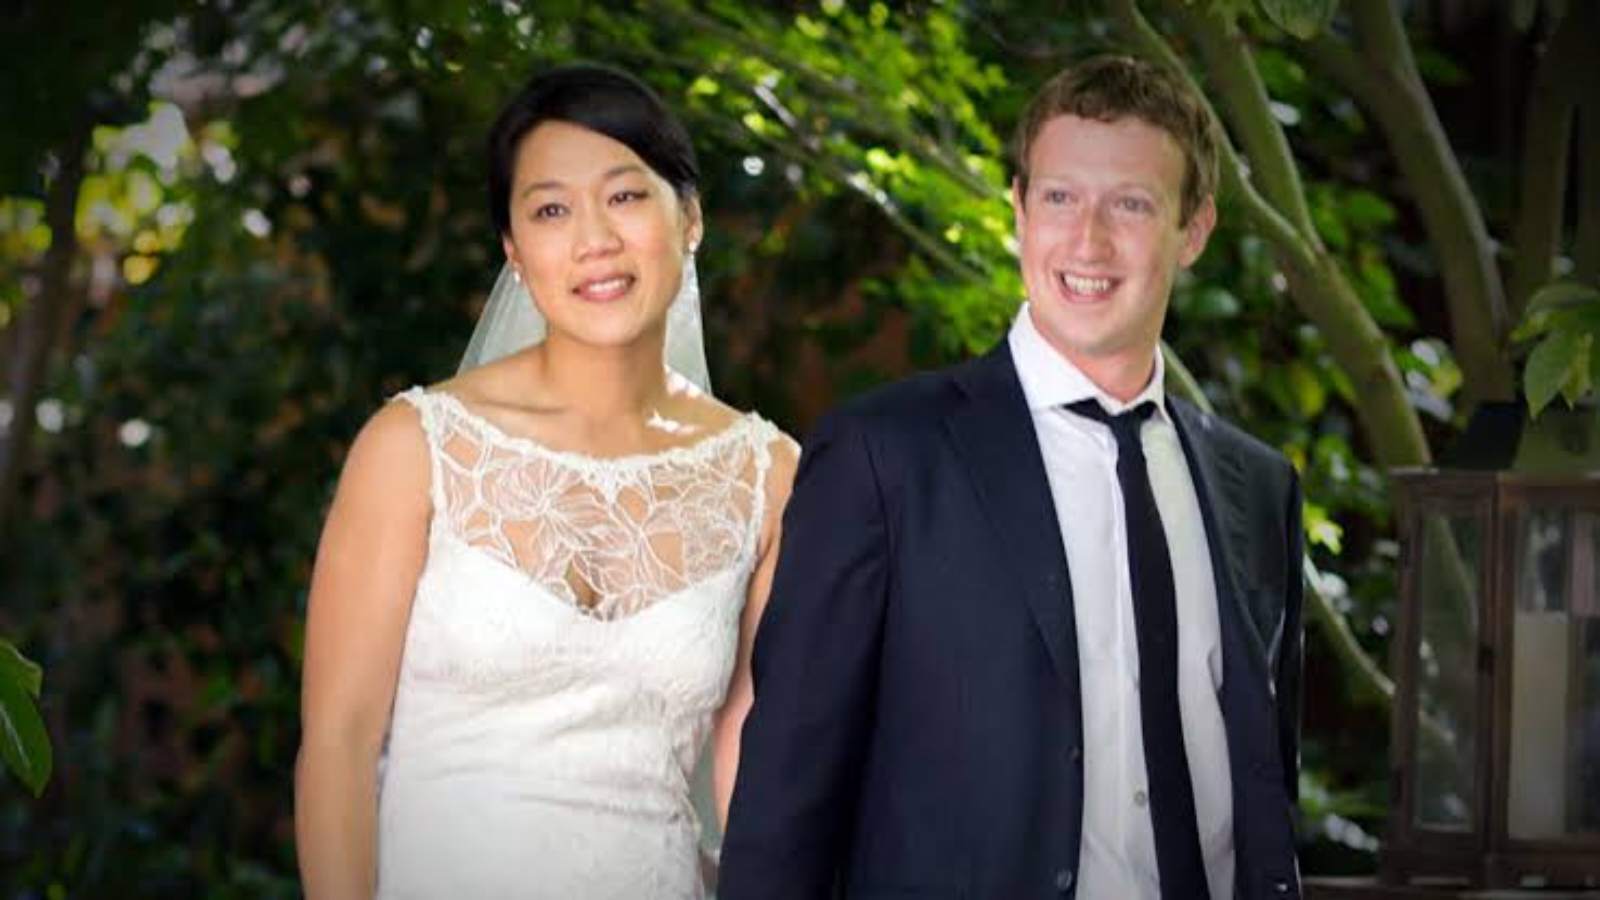 Mark Zuckerberg and Priscilla Chan during their wedding day 